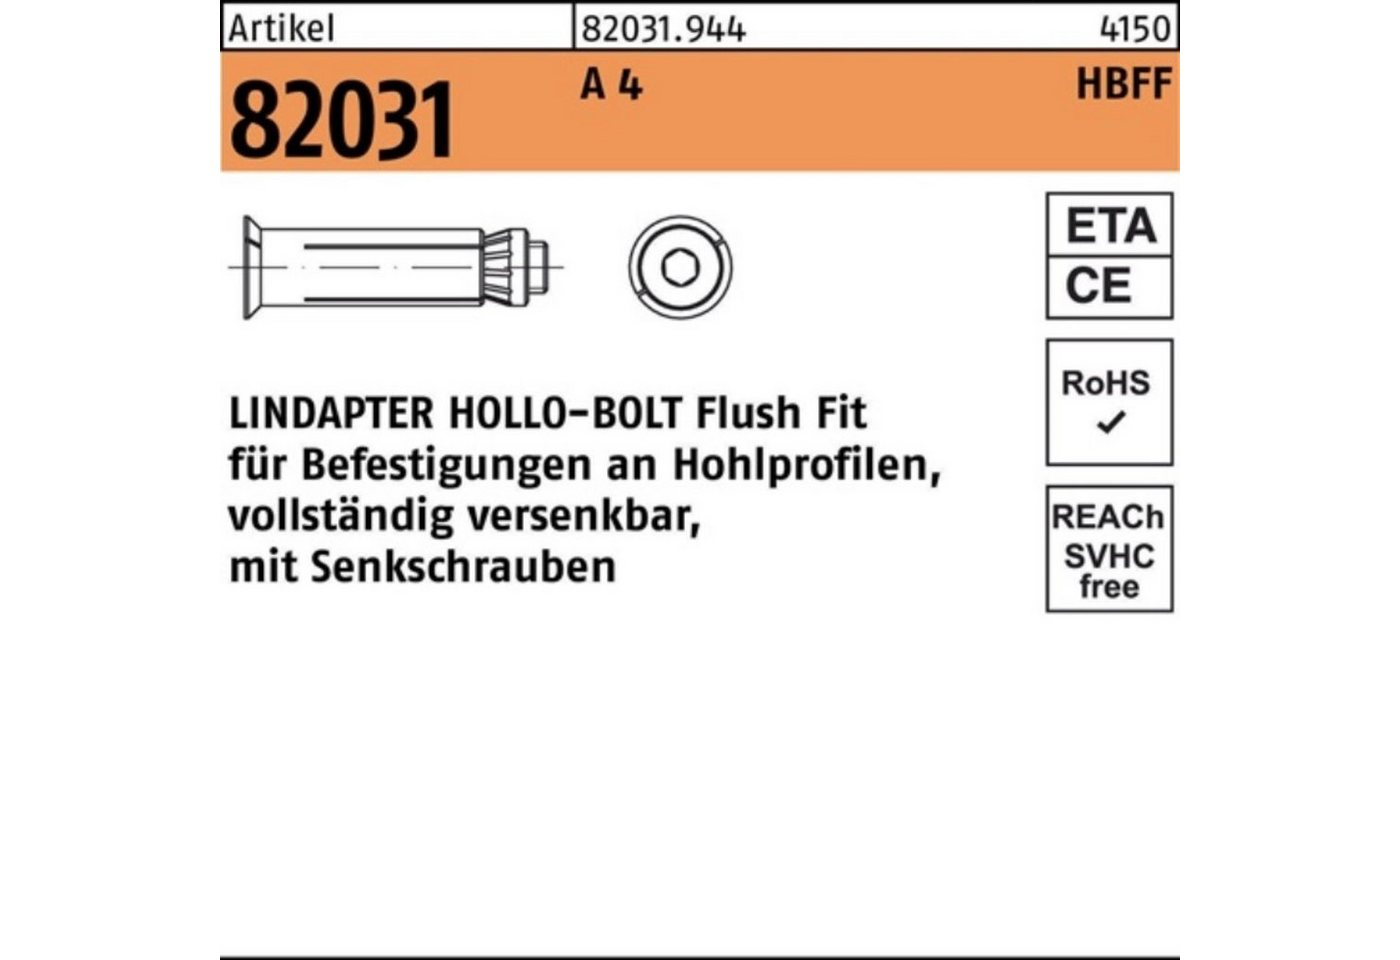 Lindapter Hohlraumdübel 100er Pack Hohlraumdübel R 82031 HBFF 08-1 (50/27) A 4 1 Stück Arti von Lindapter